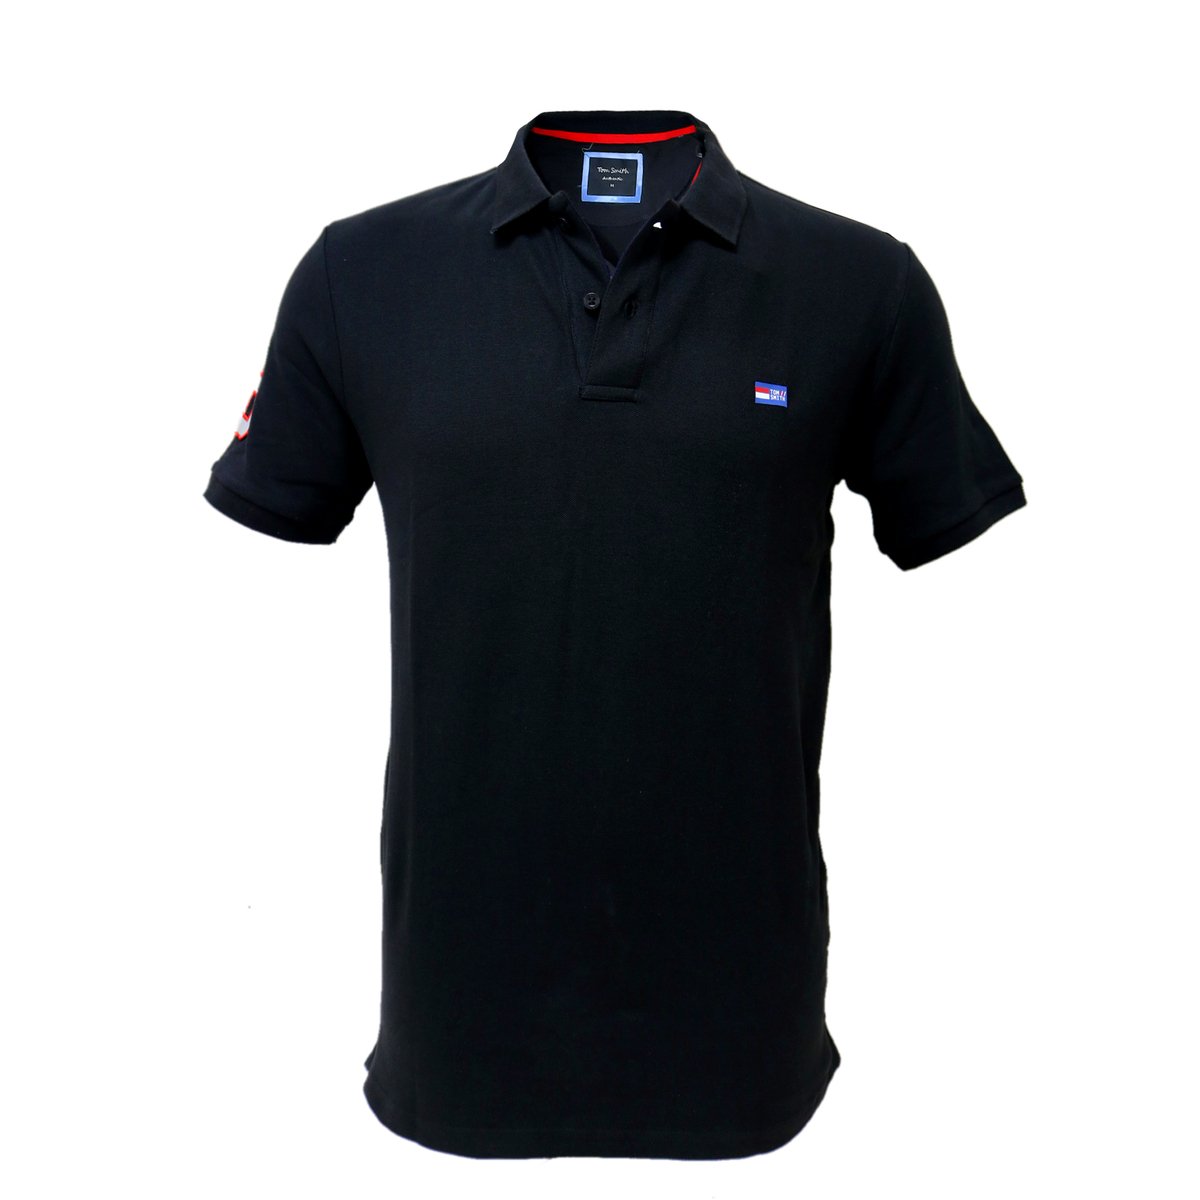 Tom Smith Polo T-Shirt Black - XL